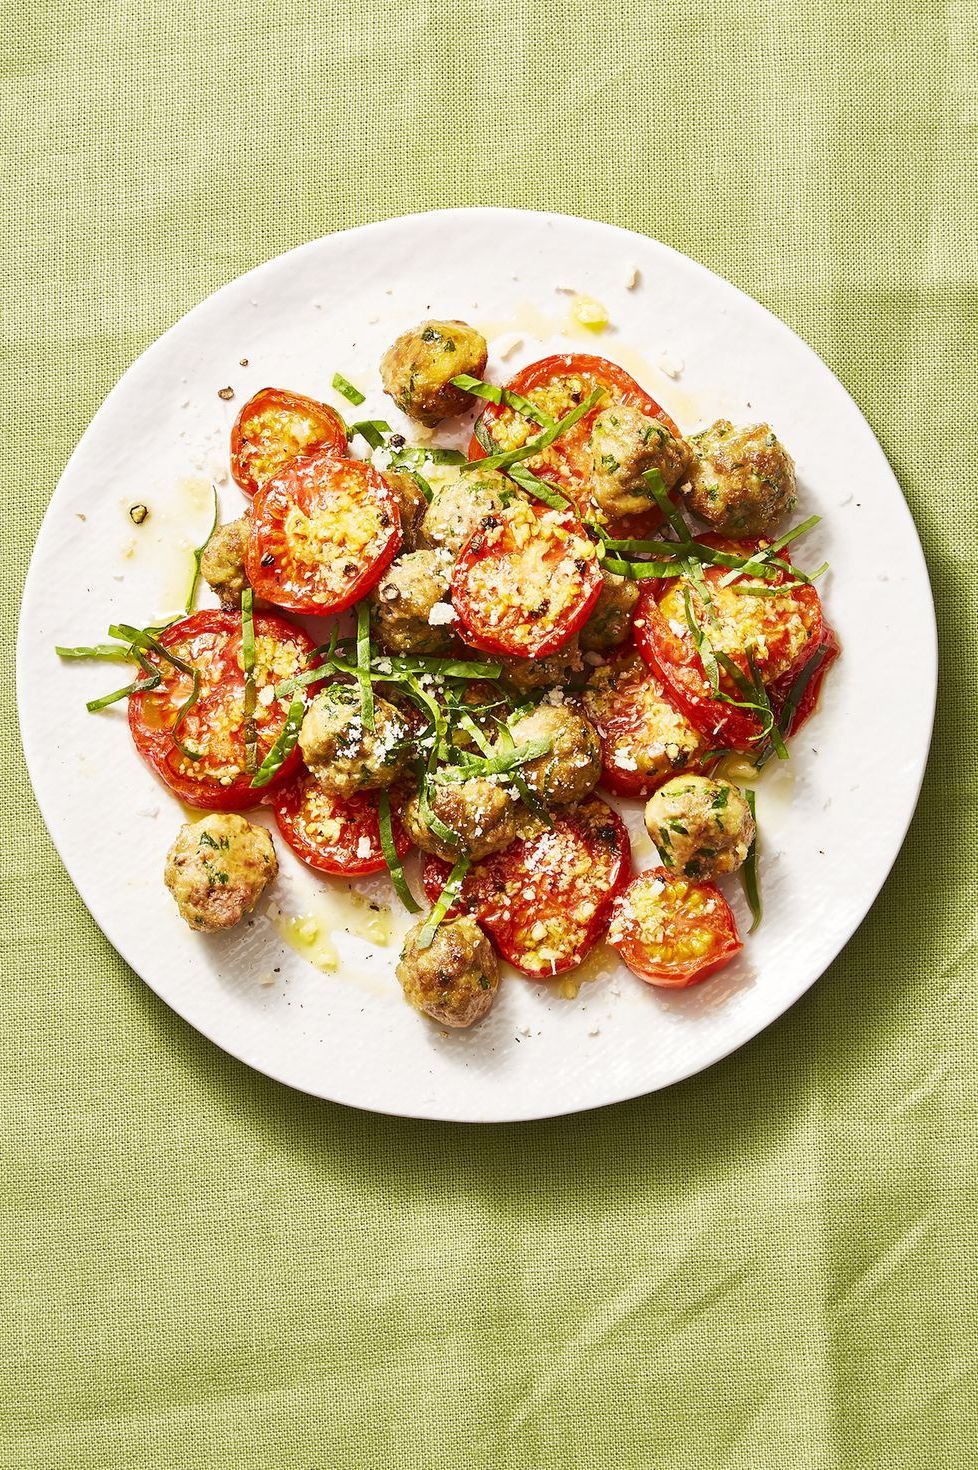 https://hips.hearstapps.com/hmg-prod/images/pantry-recipes-mini-meatballs-garlicky-tomatoes-1565361556.jpg